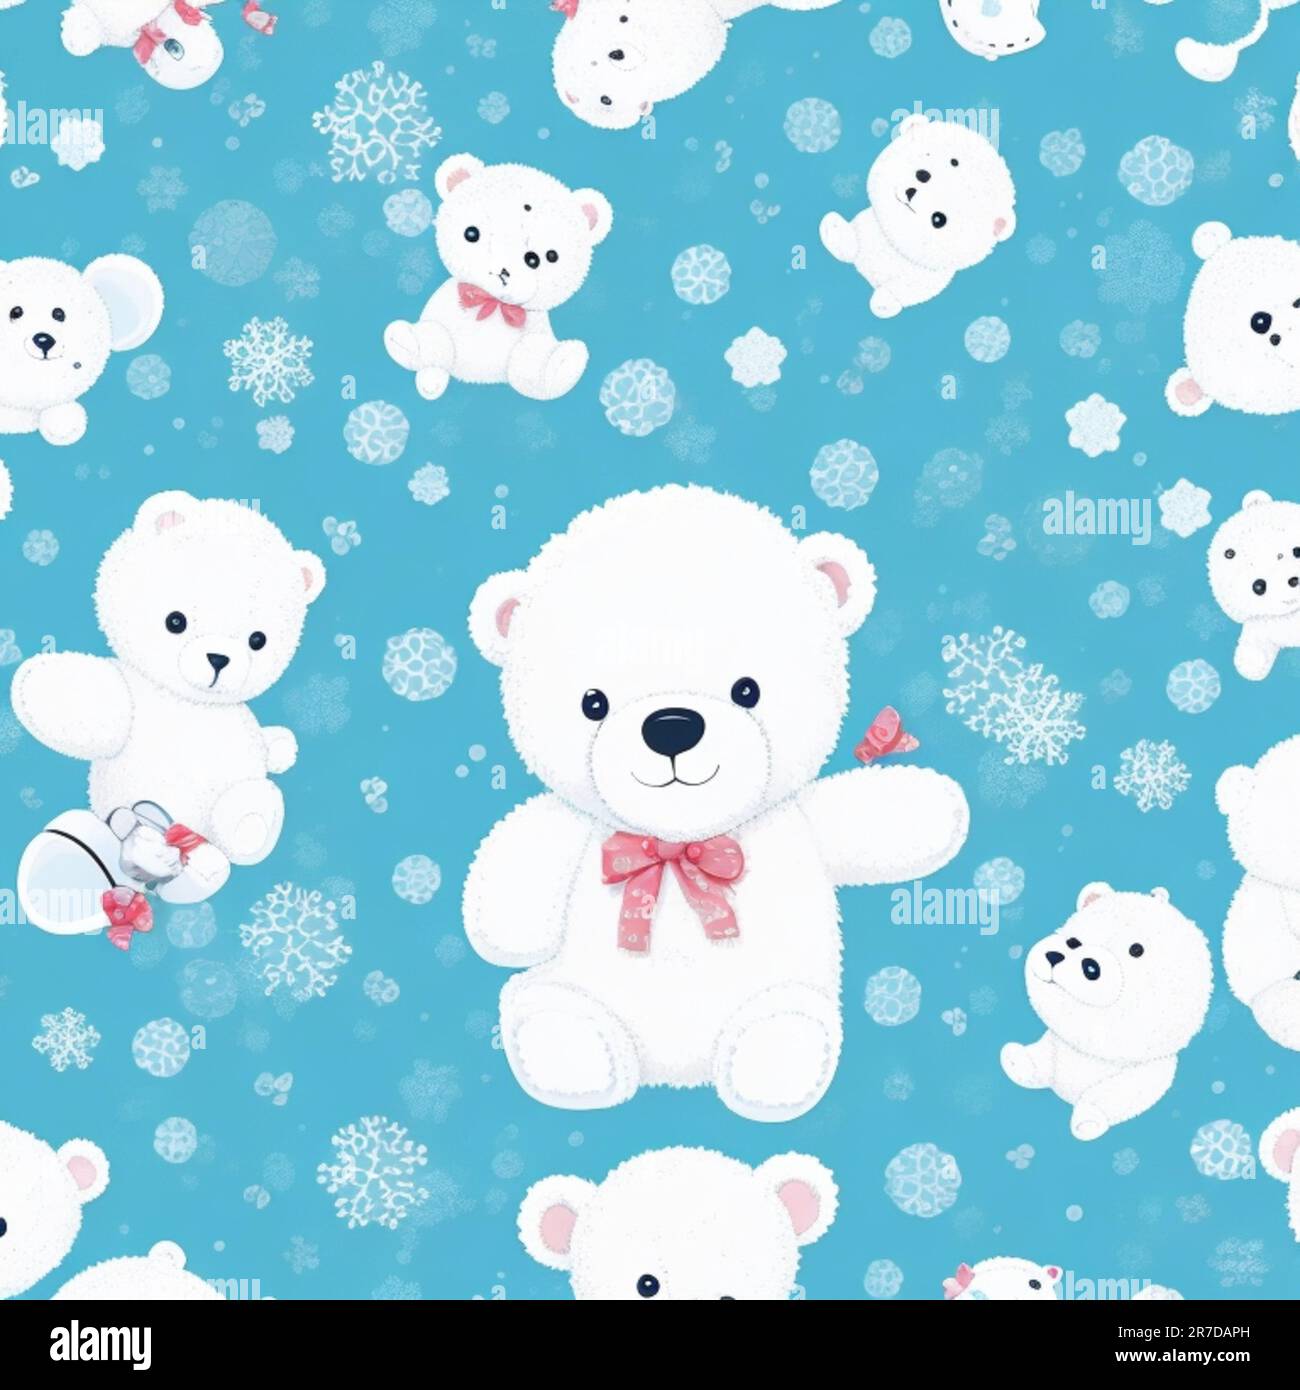 51,105 Blue Teddy Bear Images, Stock Photos & Vectors | Shutterstock